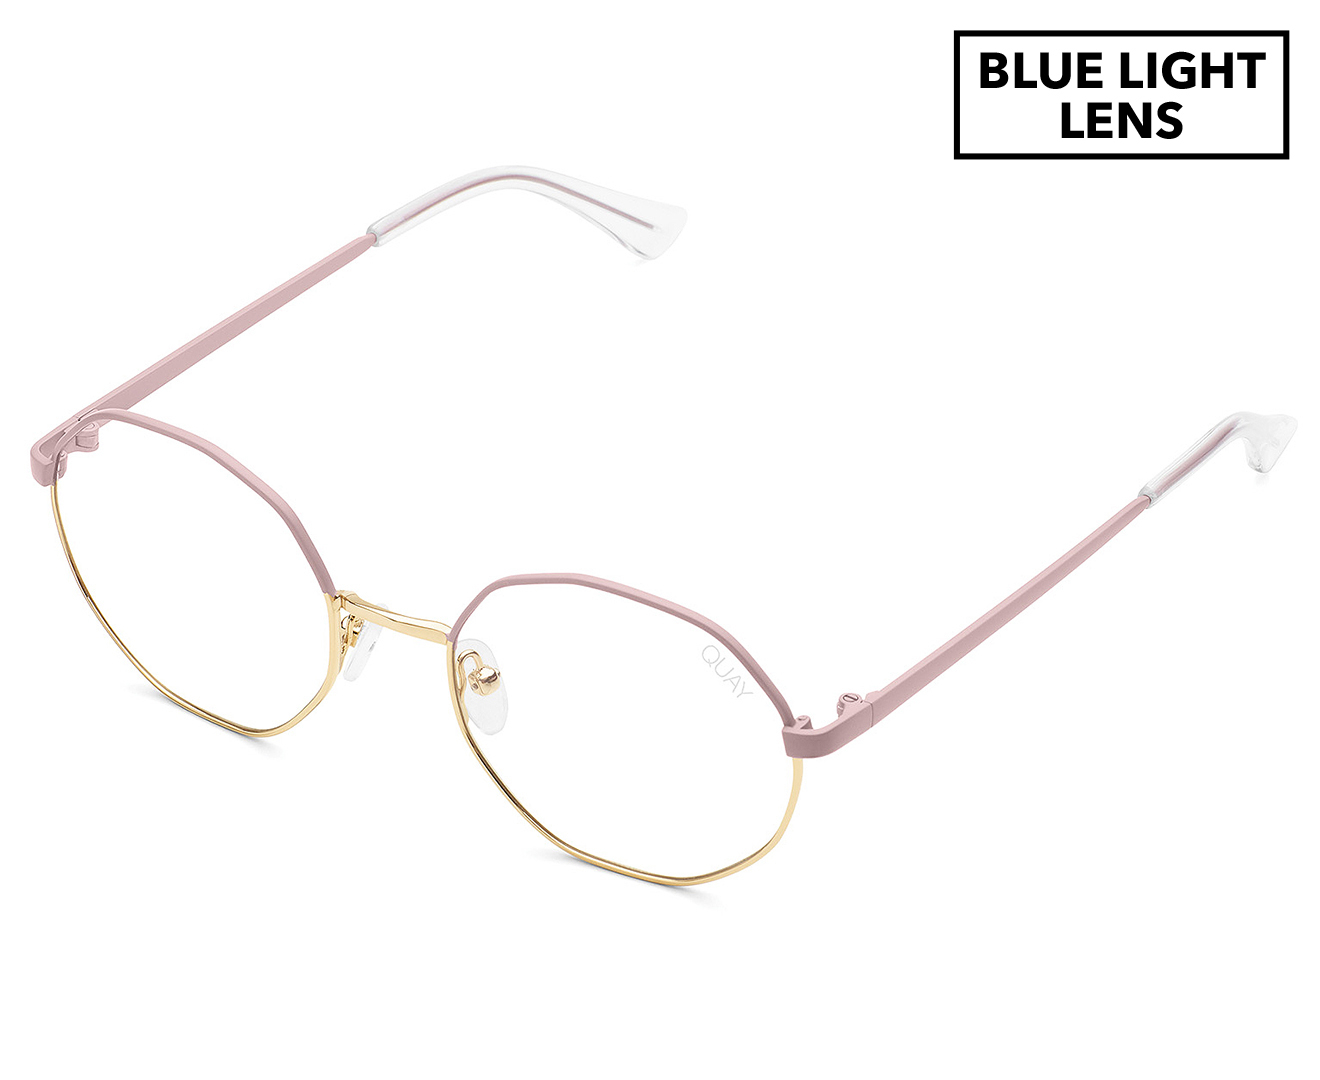 Quay Australia Eclectic Round Blue Light Glasses Dillards